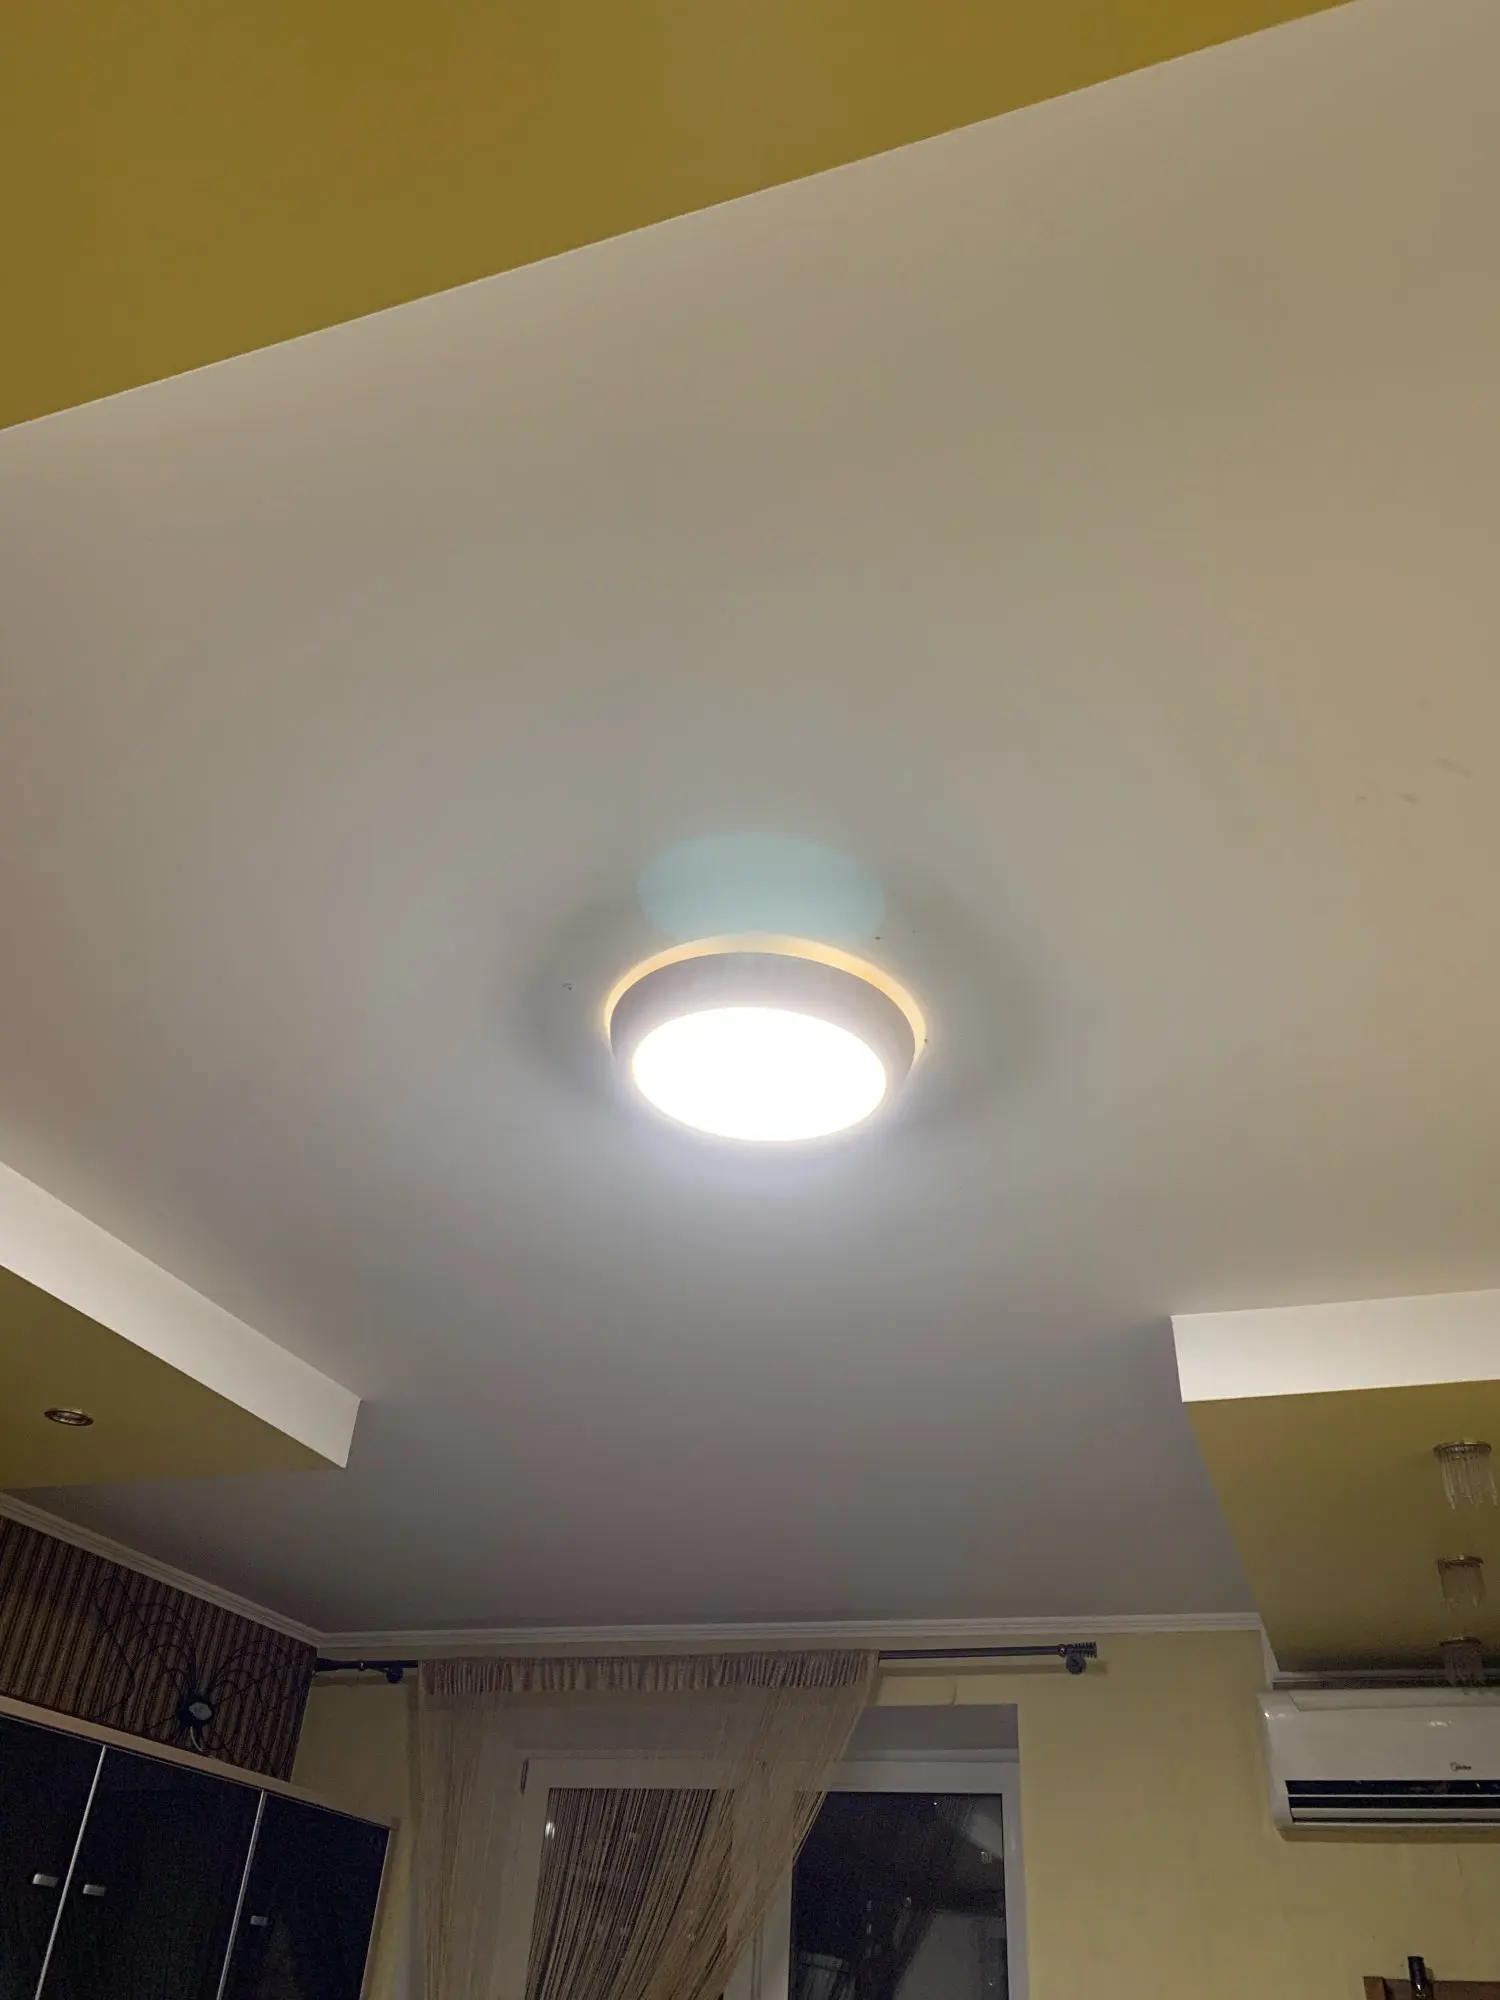 Bathroom led lights Dimmable Waterproof IP50 40w 220v lighting for Bedroom Livingroom ceiling photo review